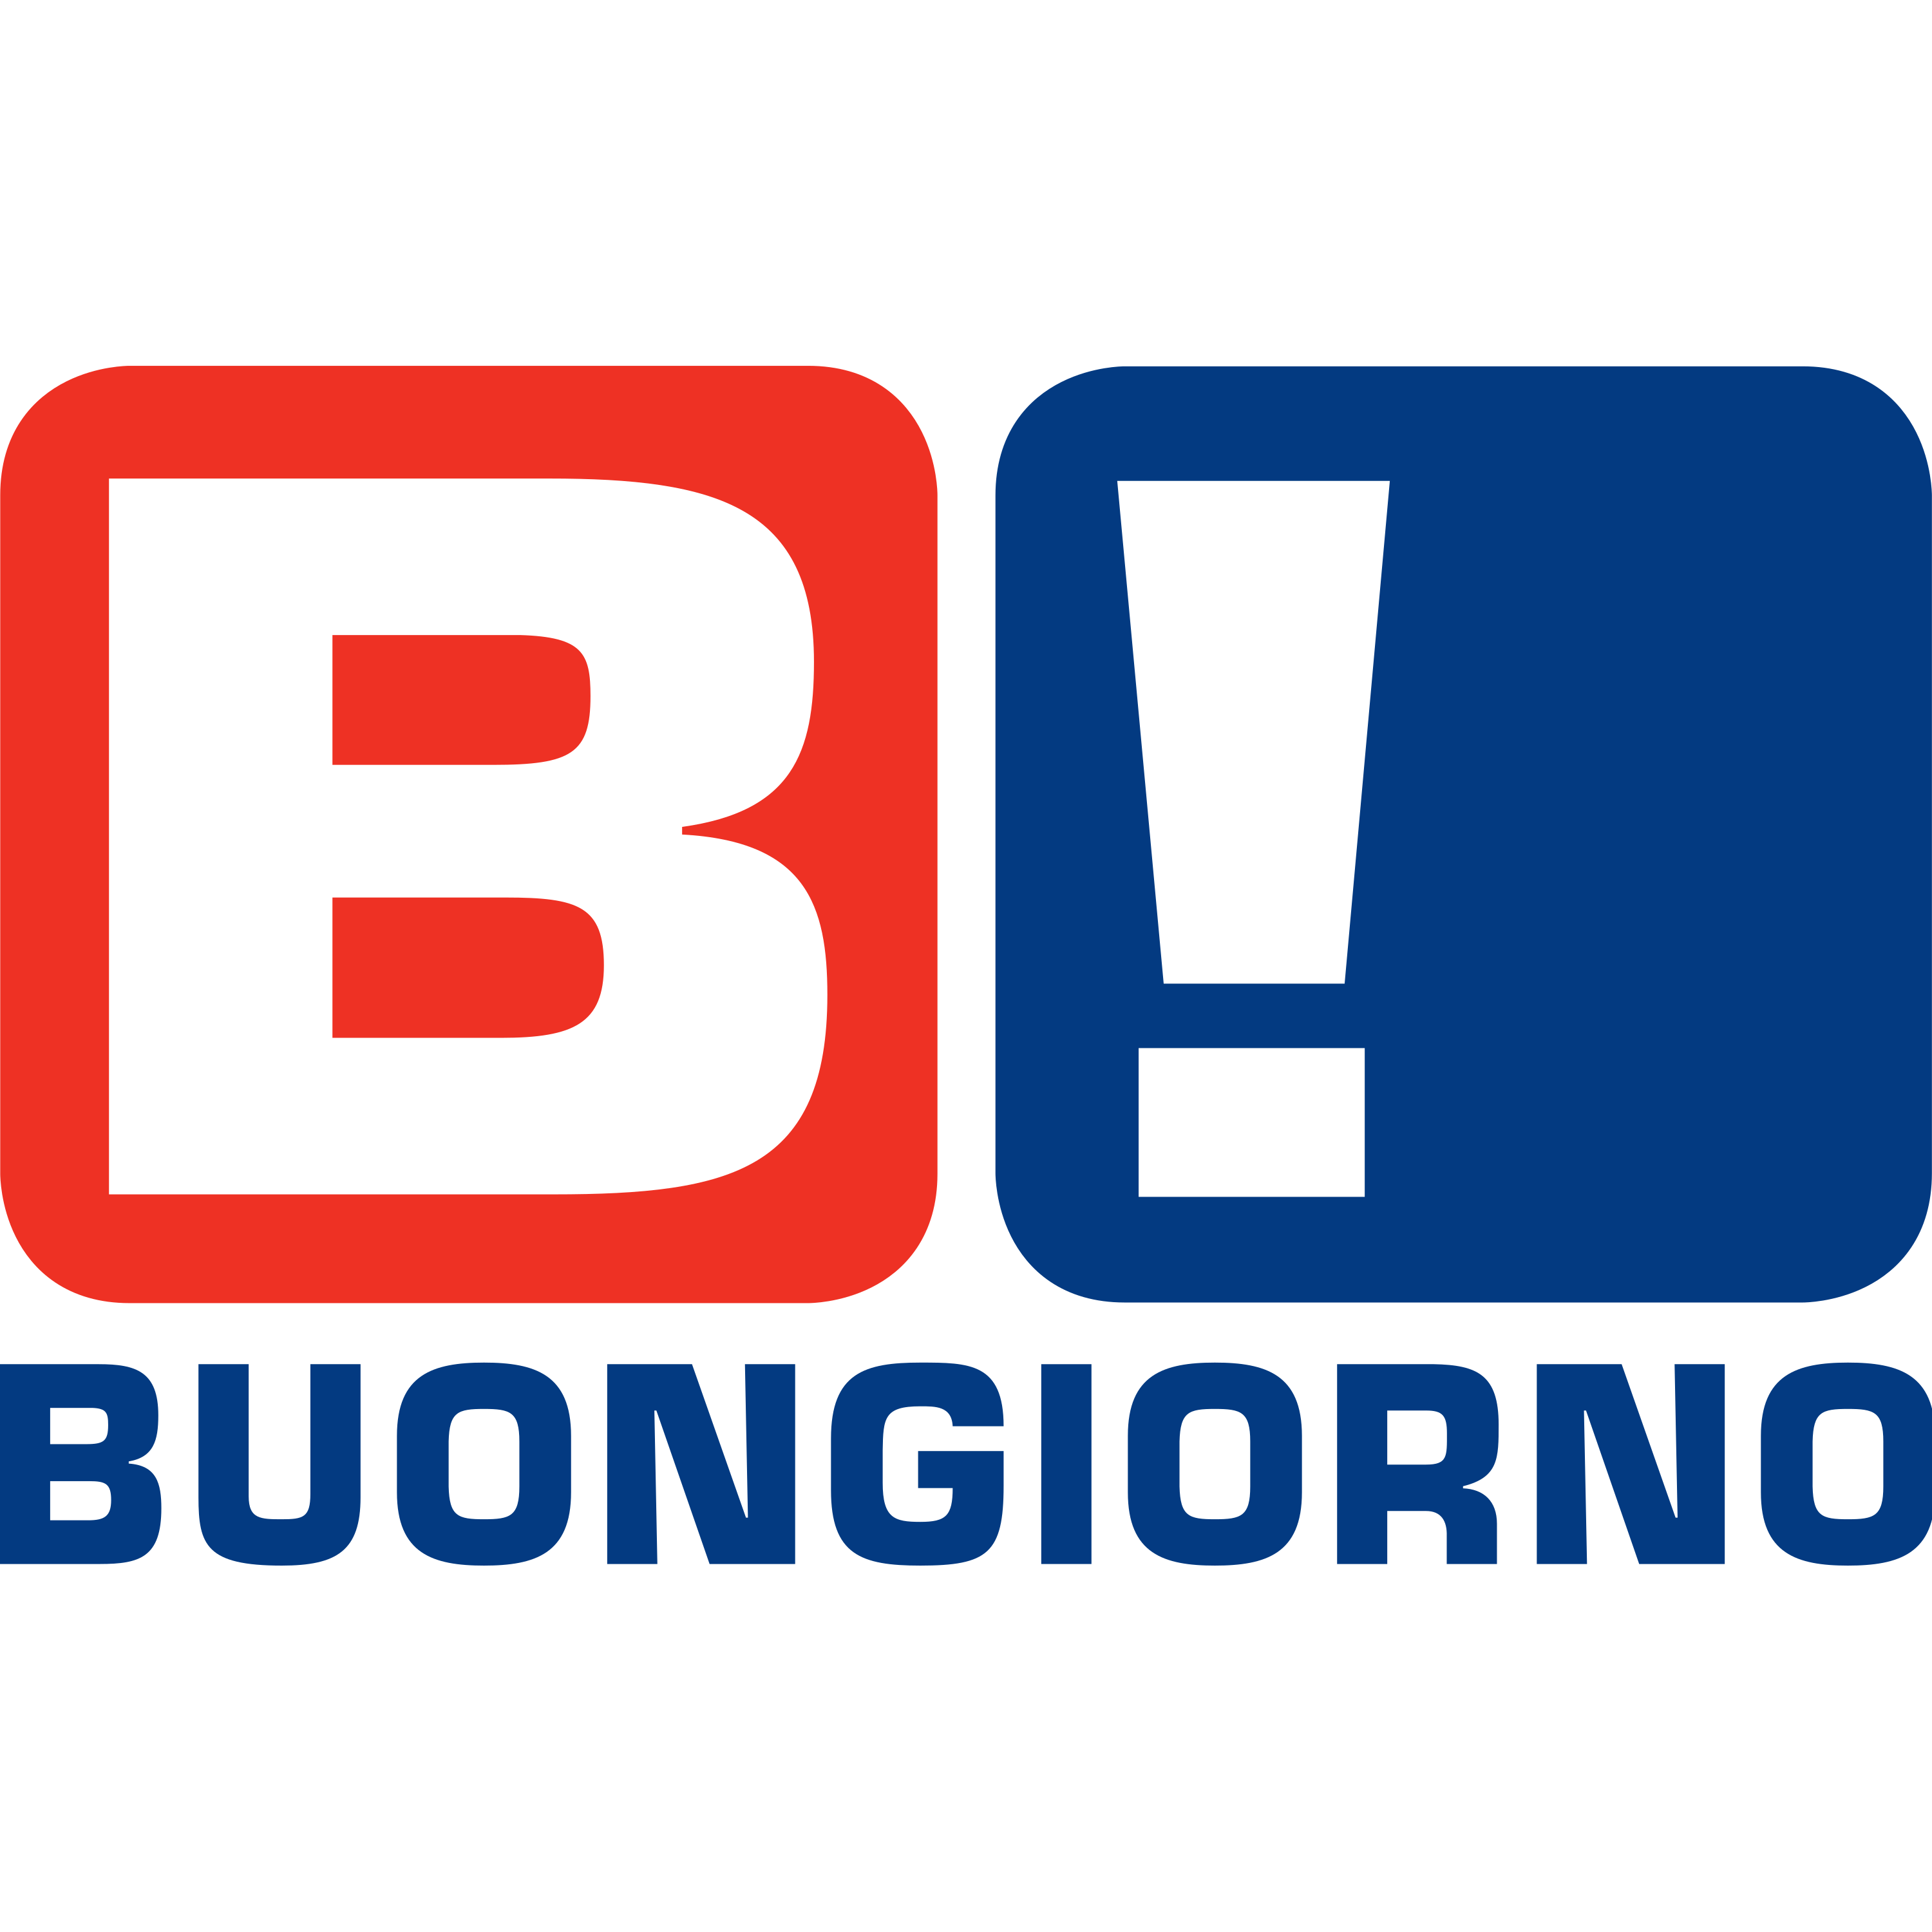 Buongiorno Logo  Transparent Image